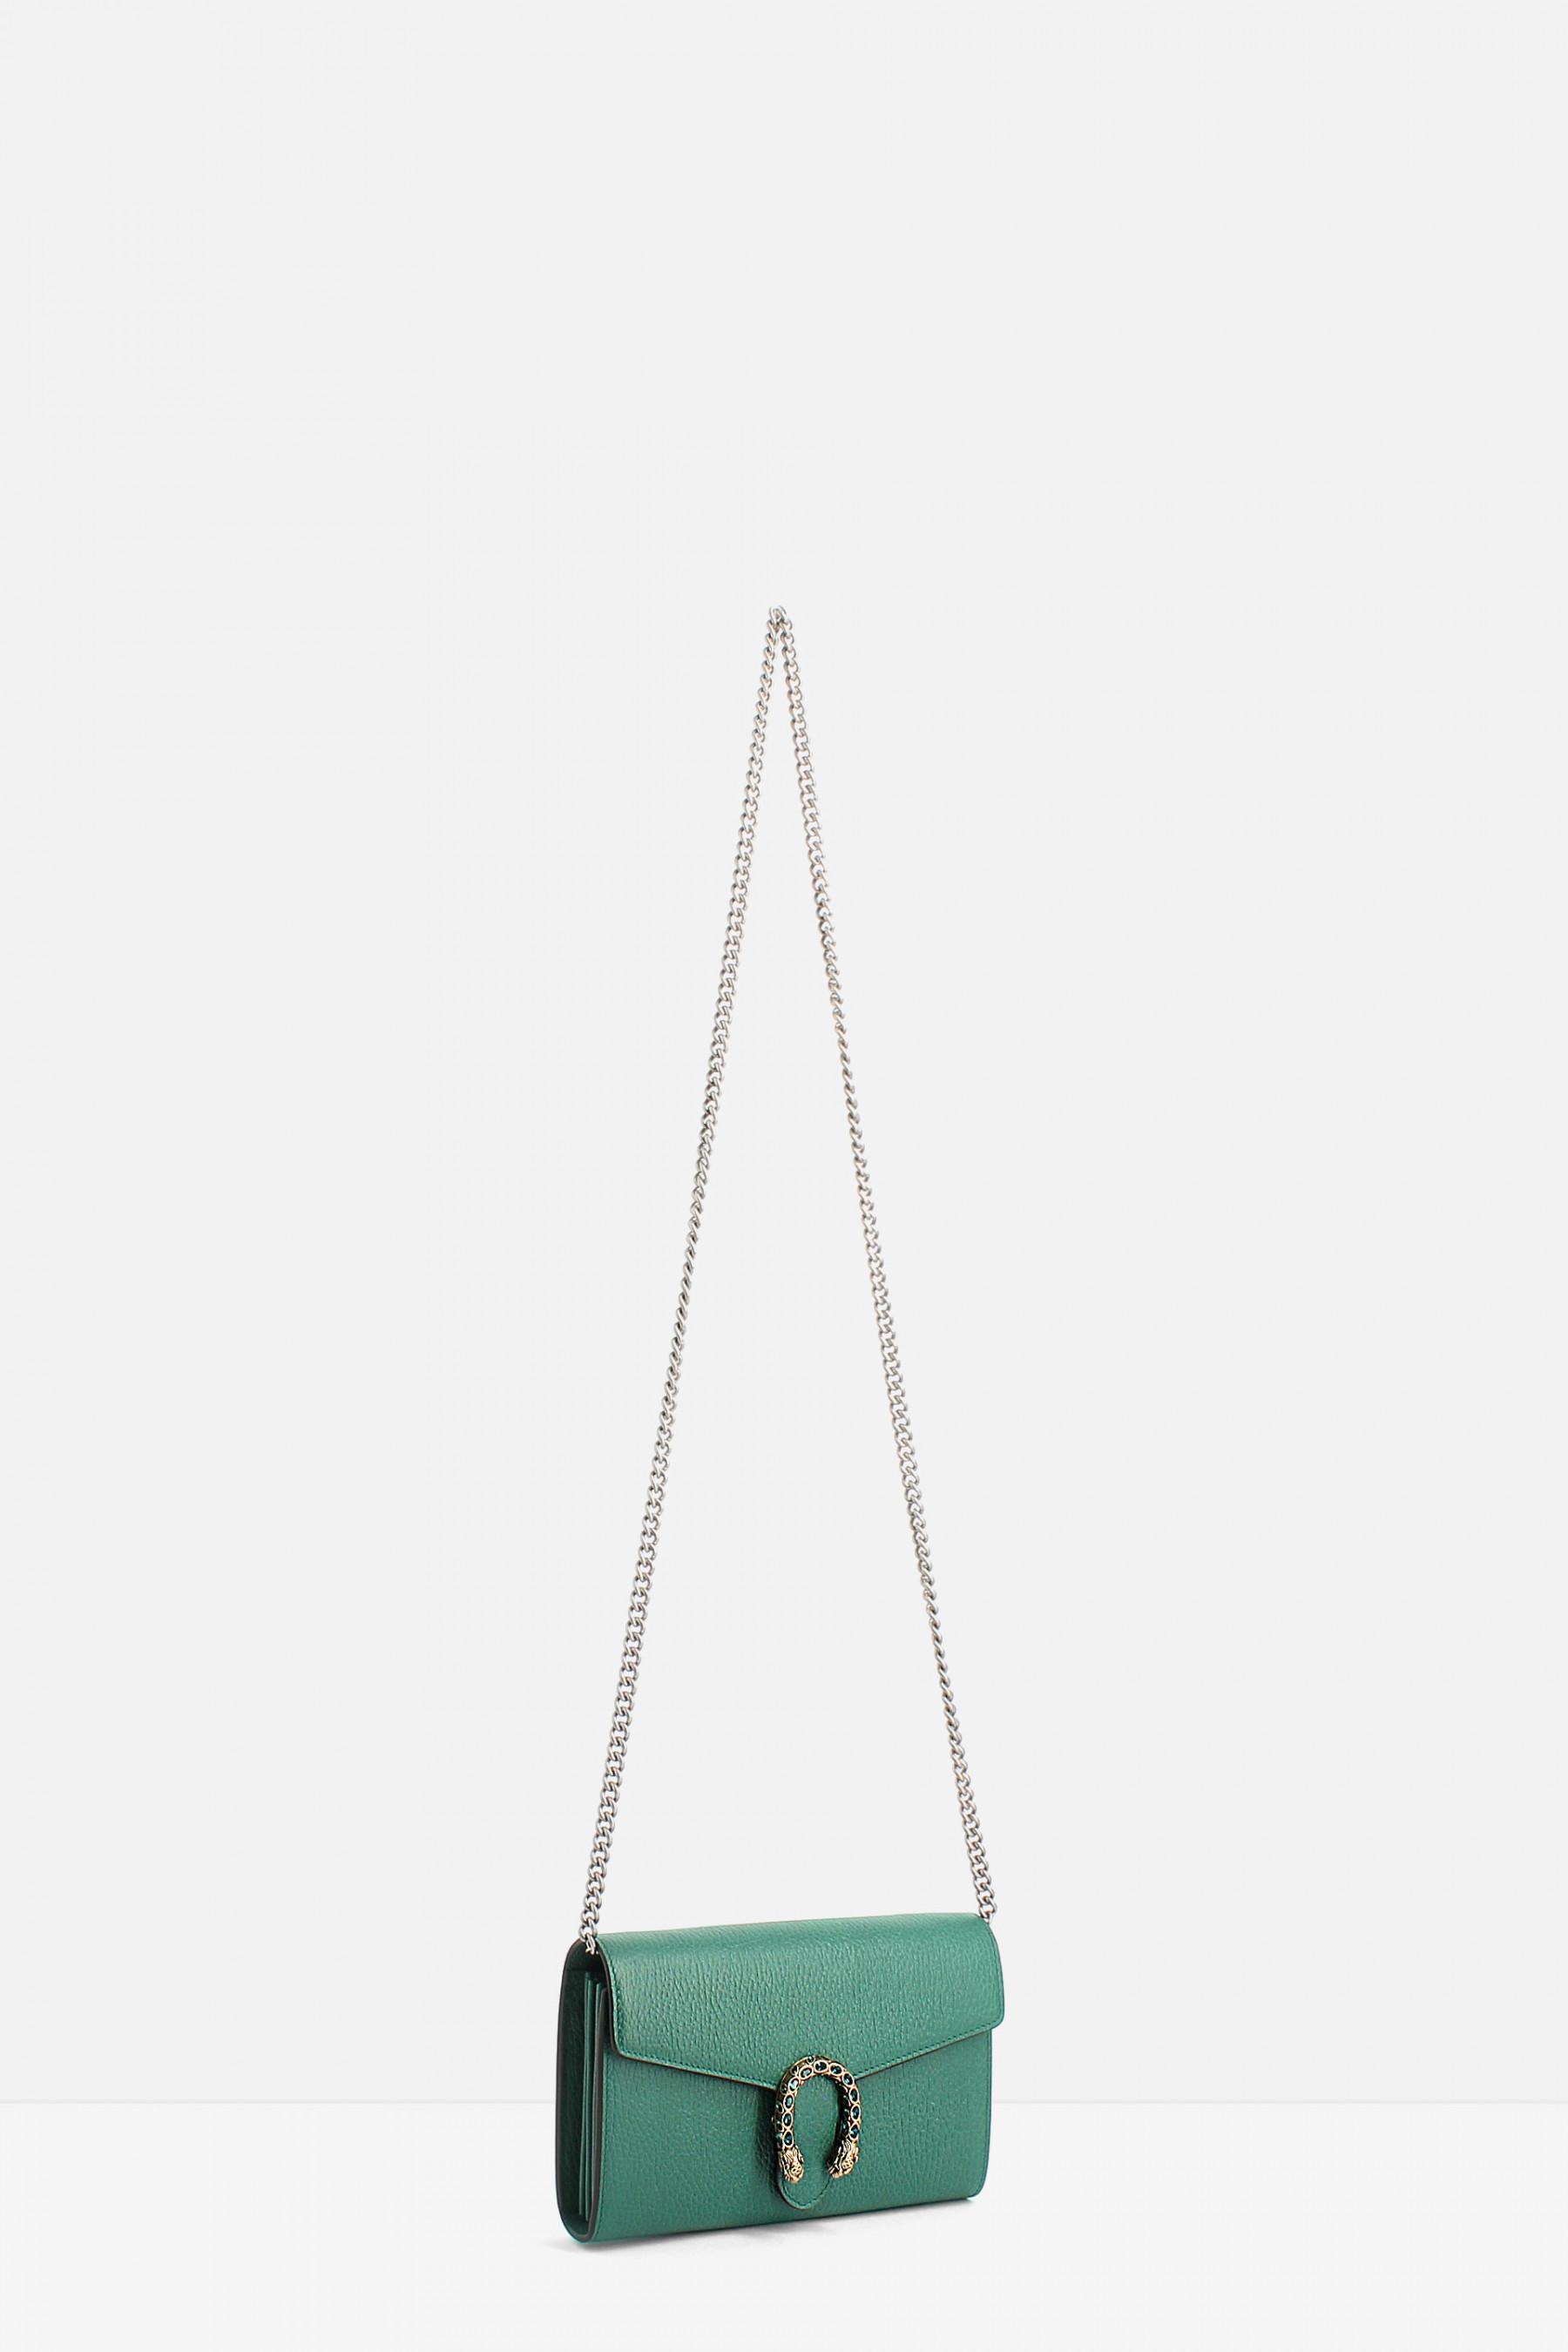 dionysus leather mini chain bag green